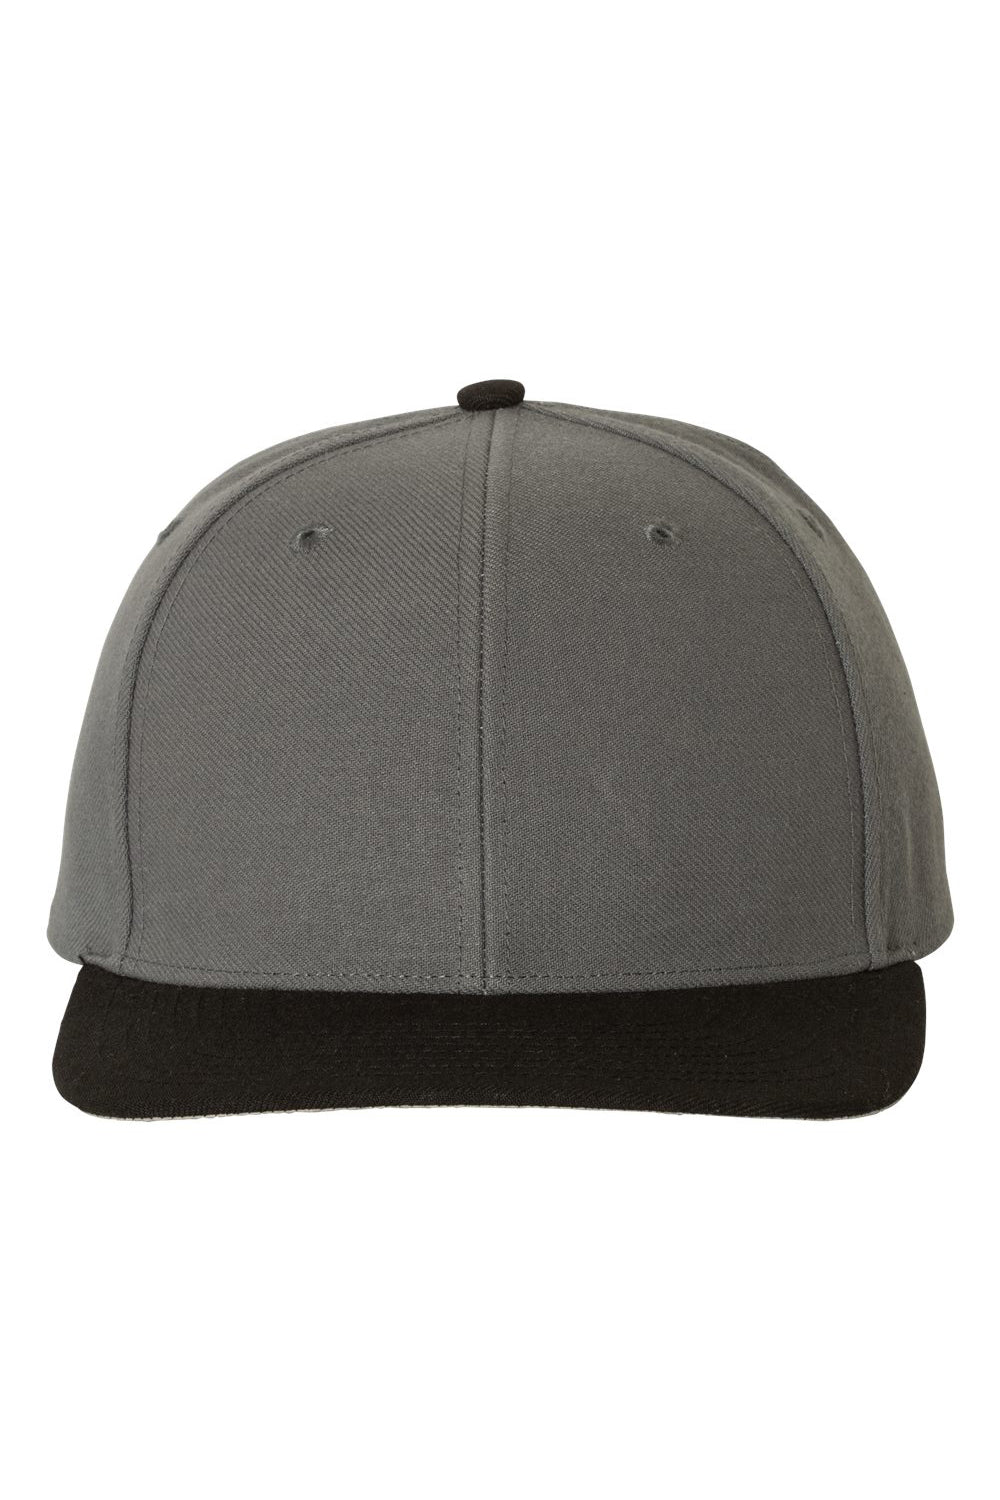 Richardson 514 Mens Surge Adjustable Hat Charcoal Grey/Black Flat Front